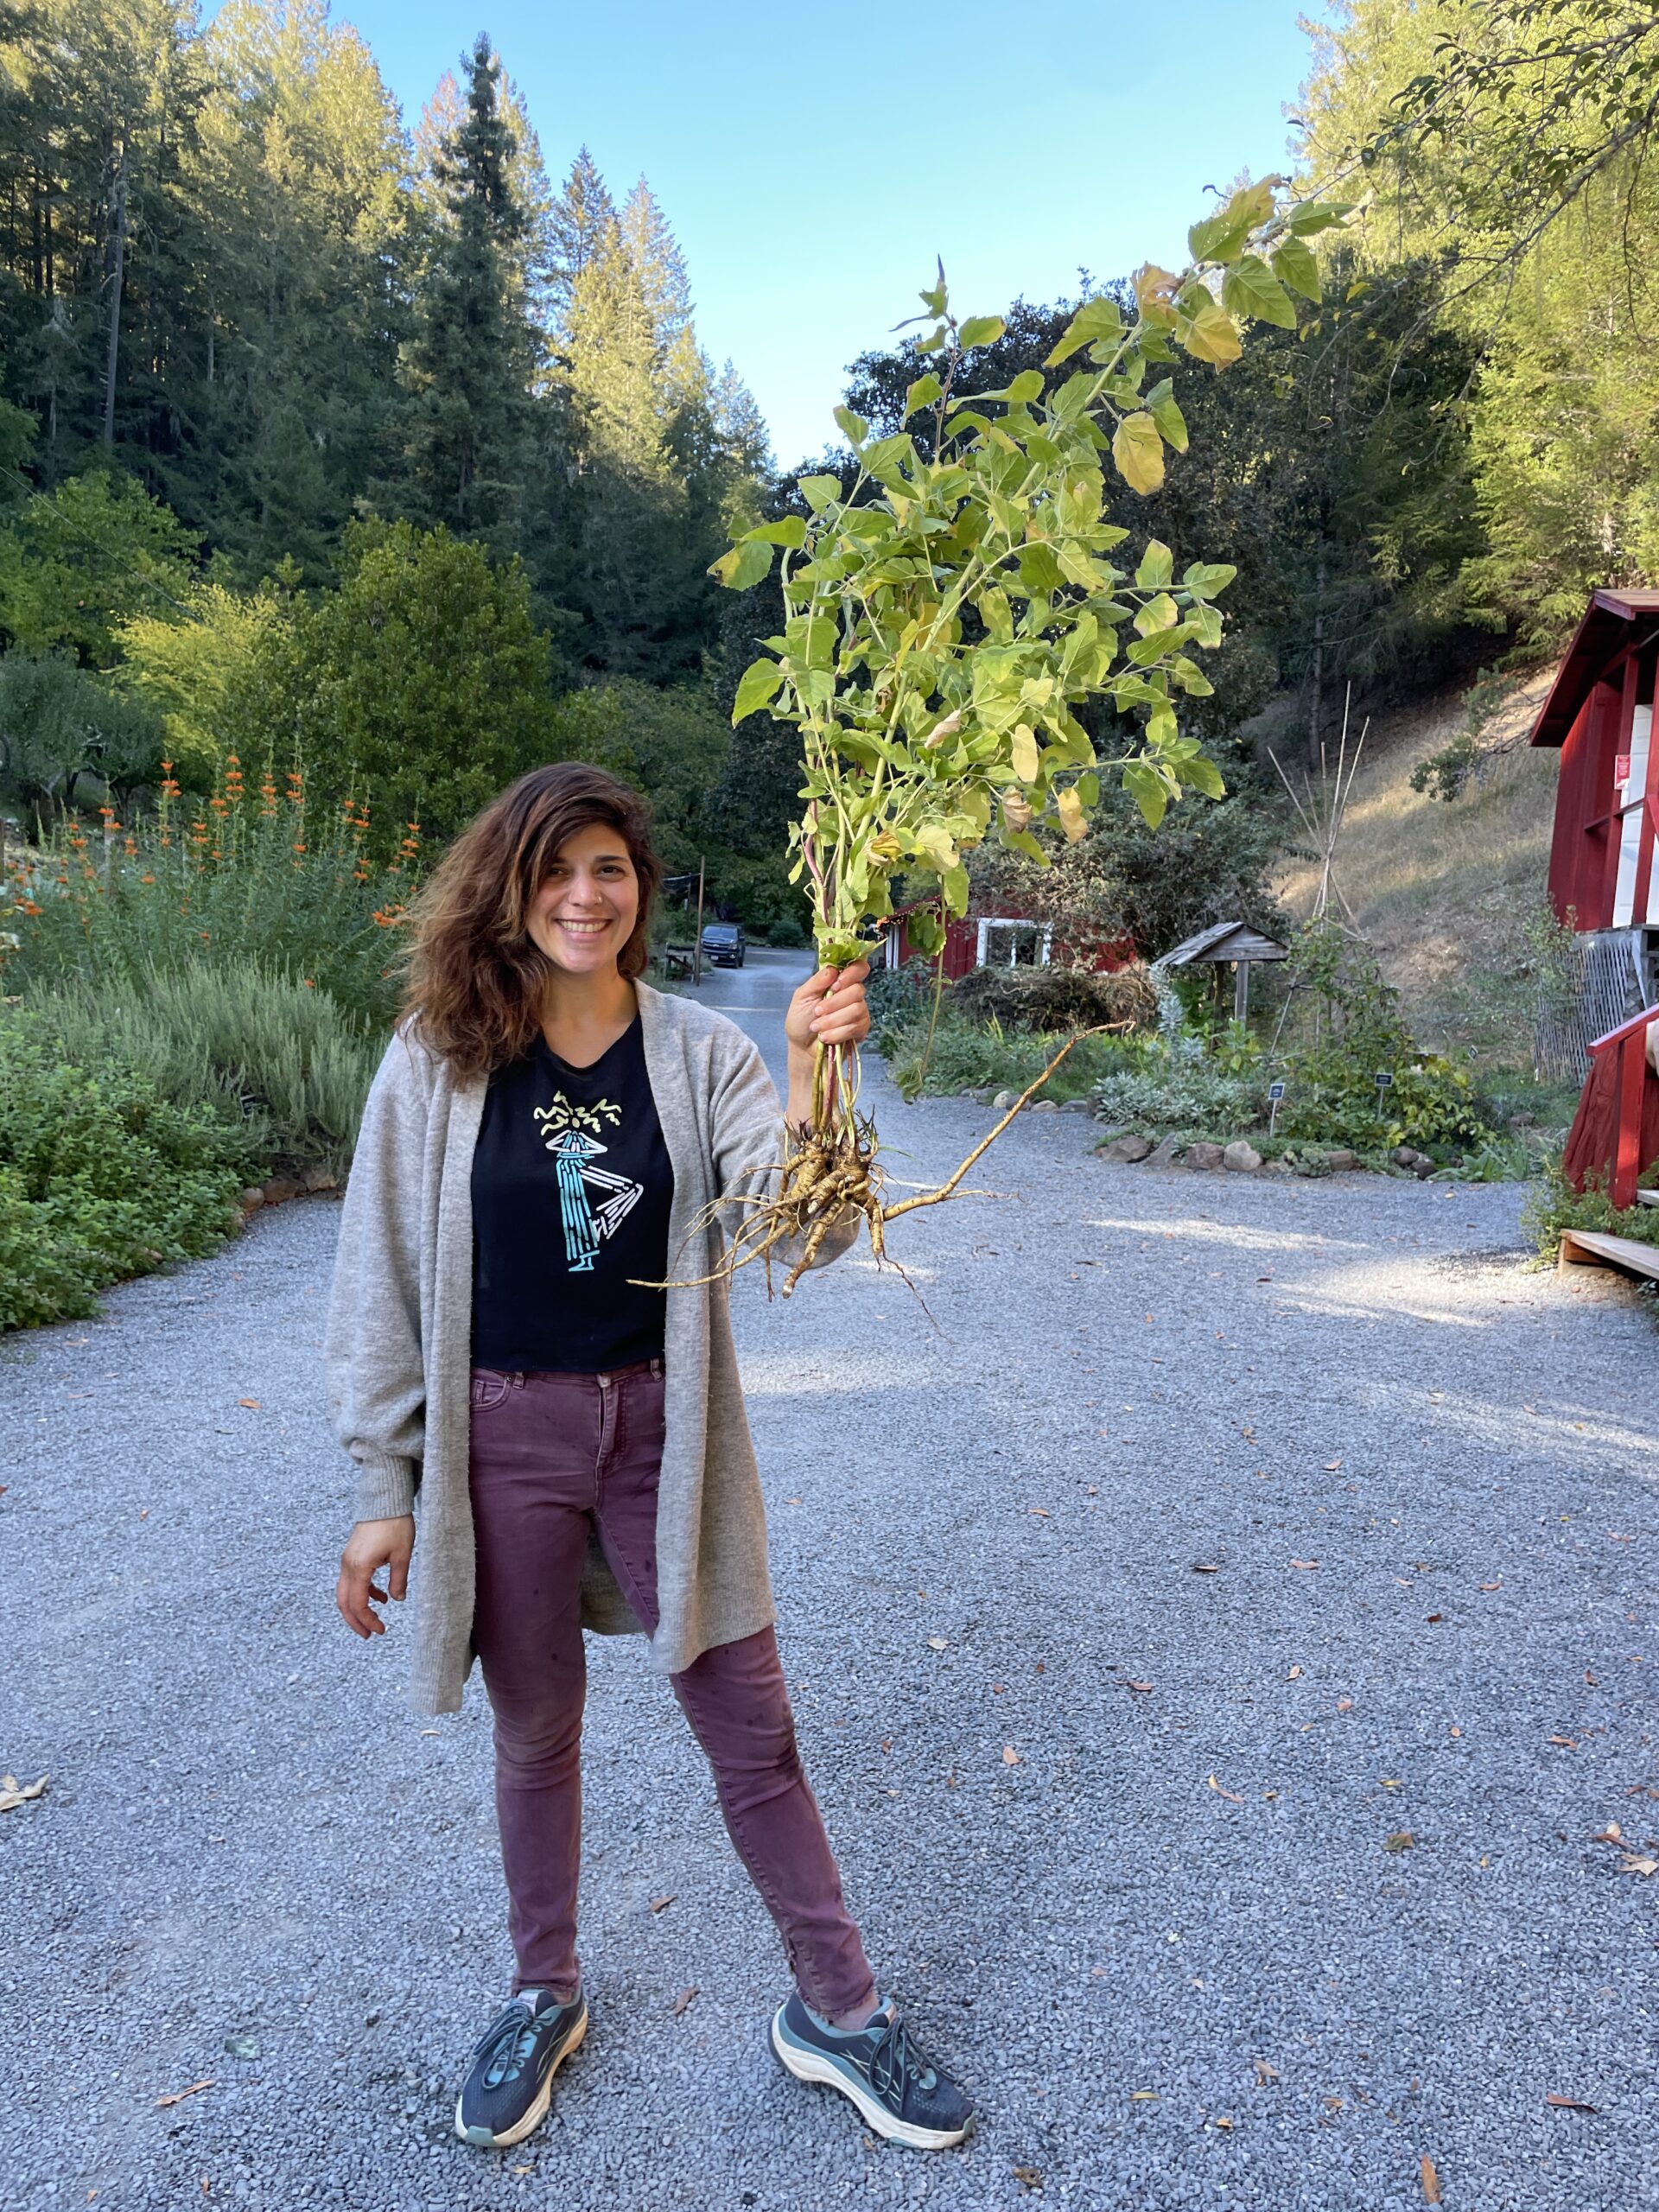 Laura Rubin holding a plant